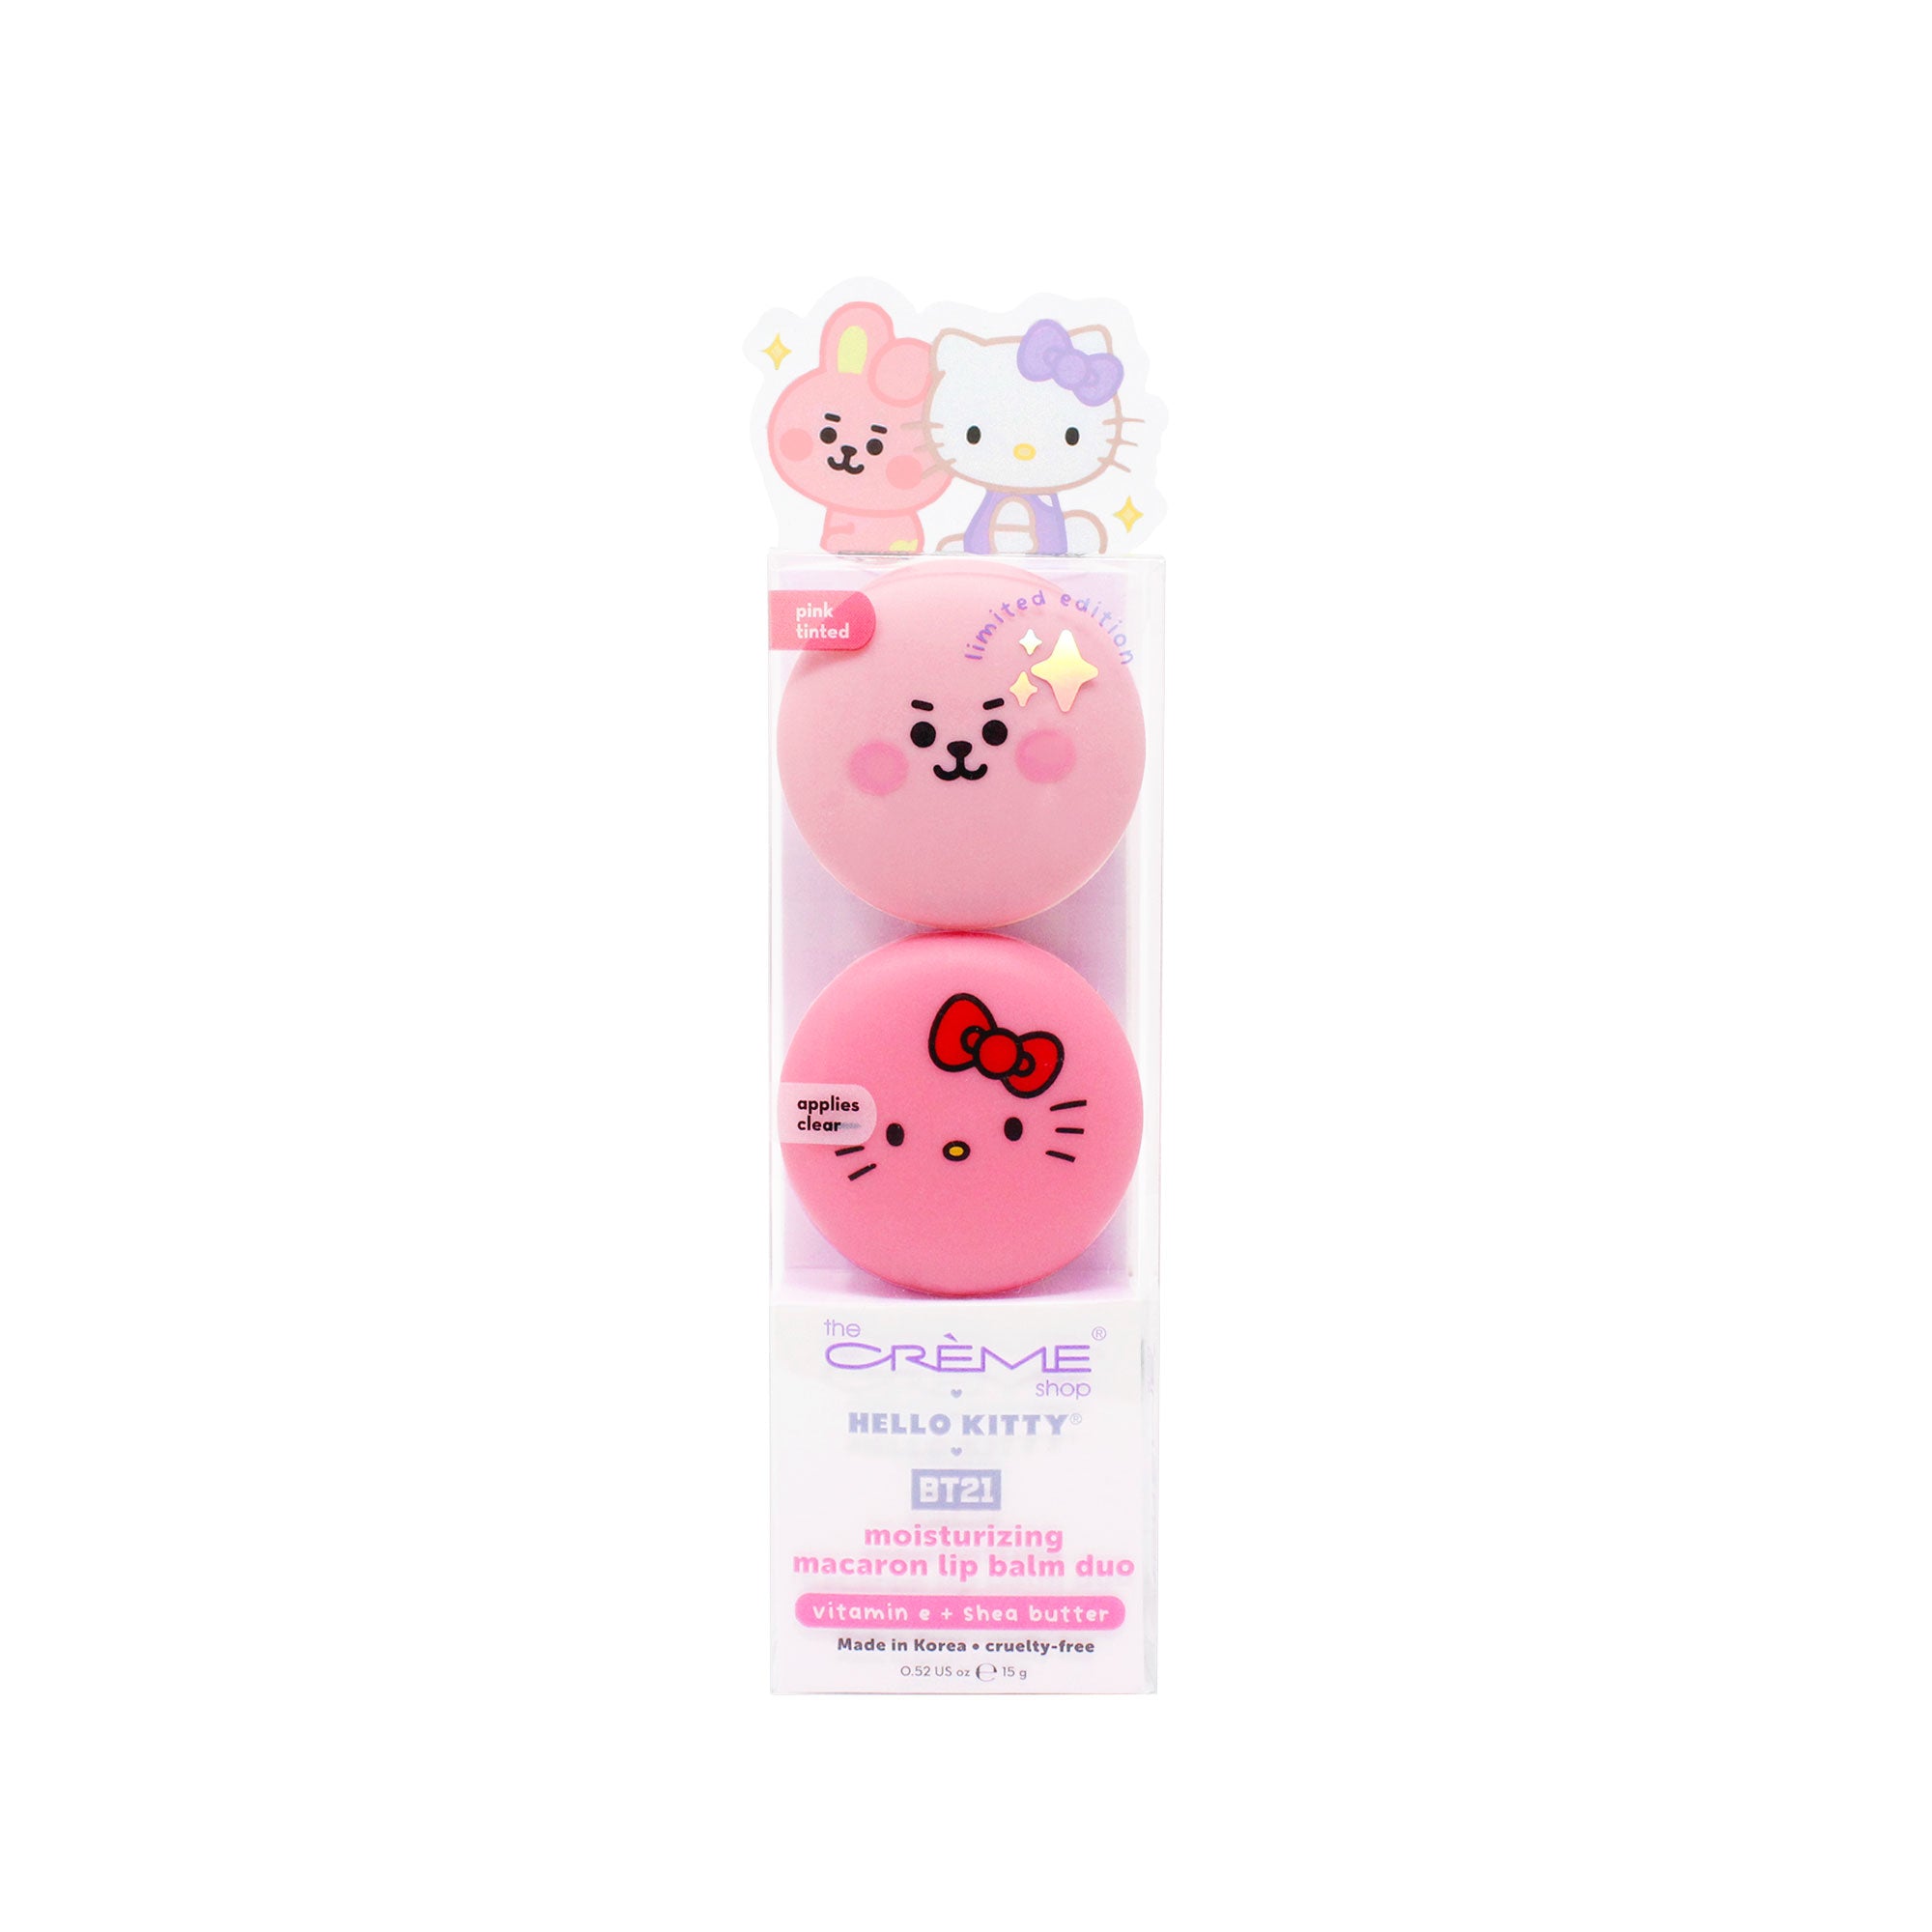 Hello Kitty & BT21 COOKY Moisturizing Macaron Lip Balm Duo Beauty The Crème Shop   